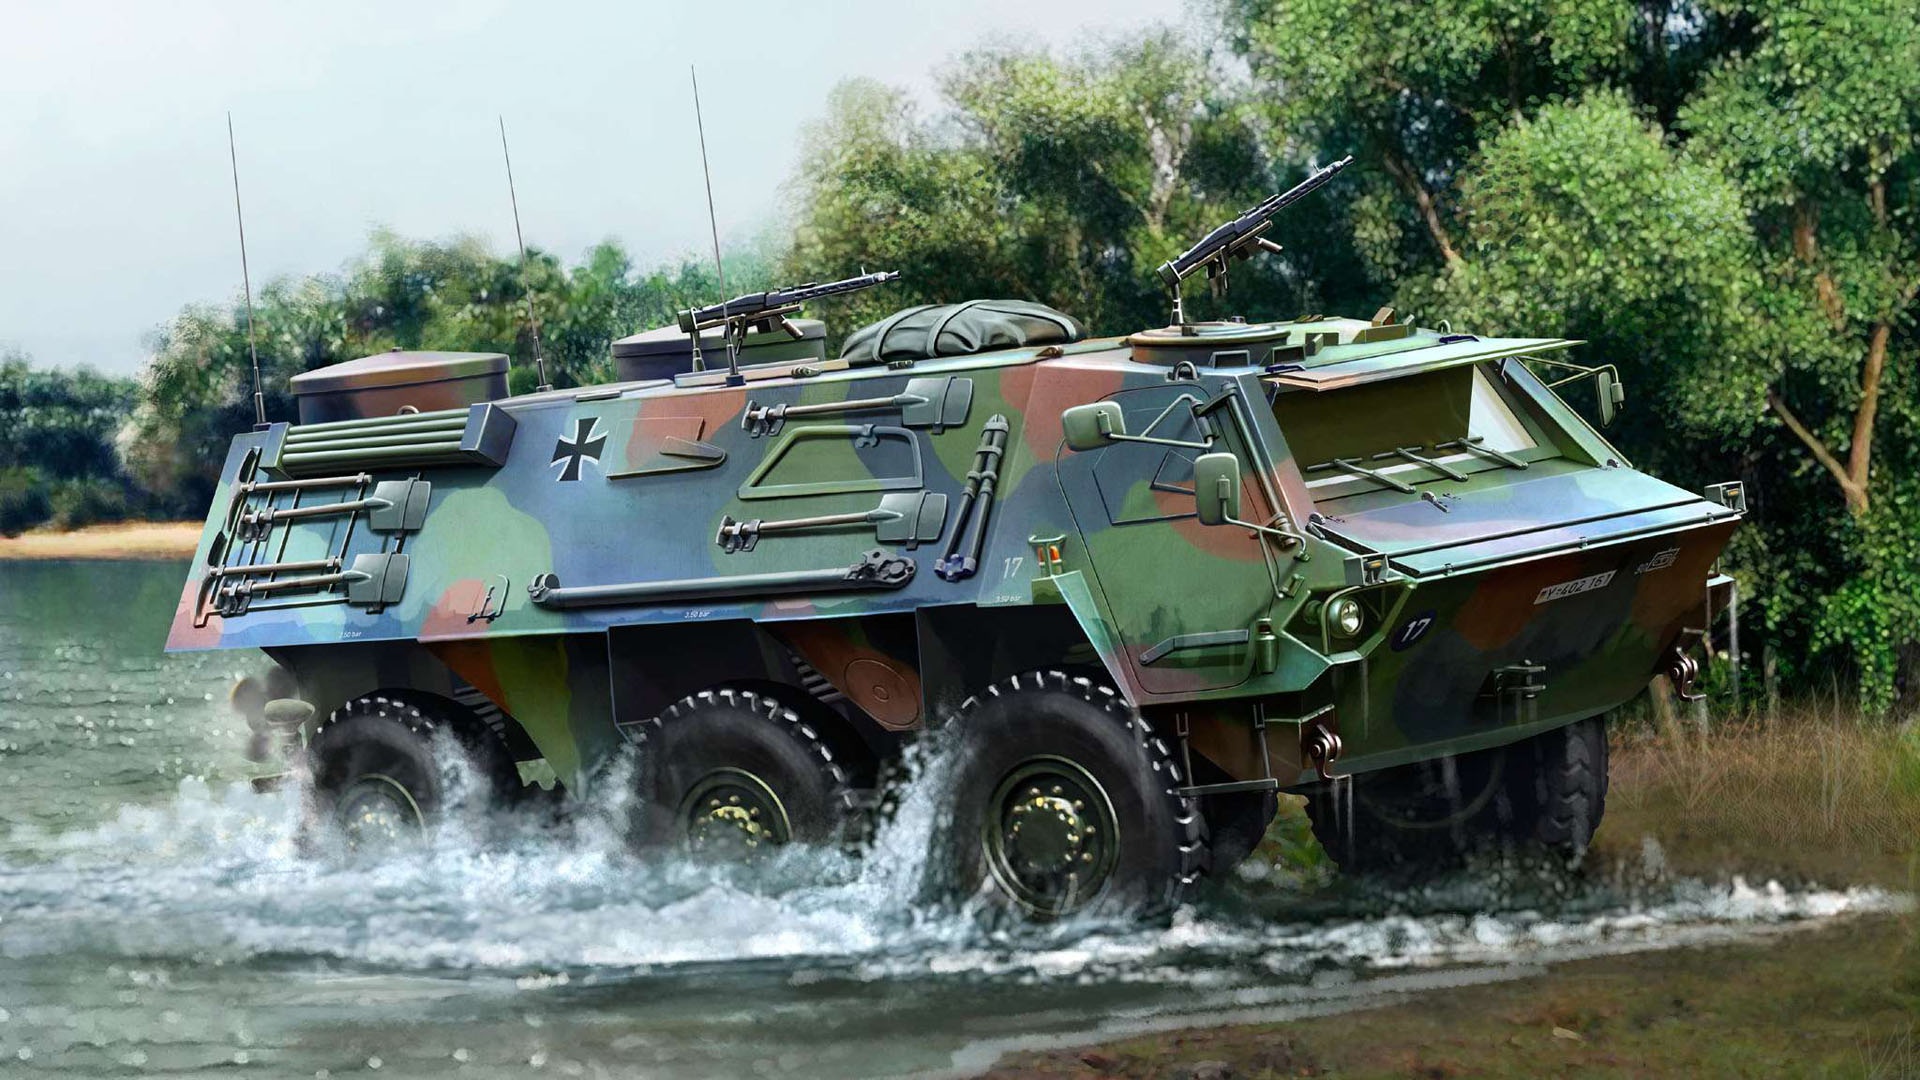 General 1920x1080 military vehicle artwork military vehicle Bundeswehr water driving trees infantry fighting vehicle